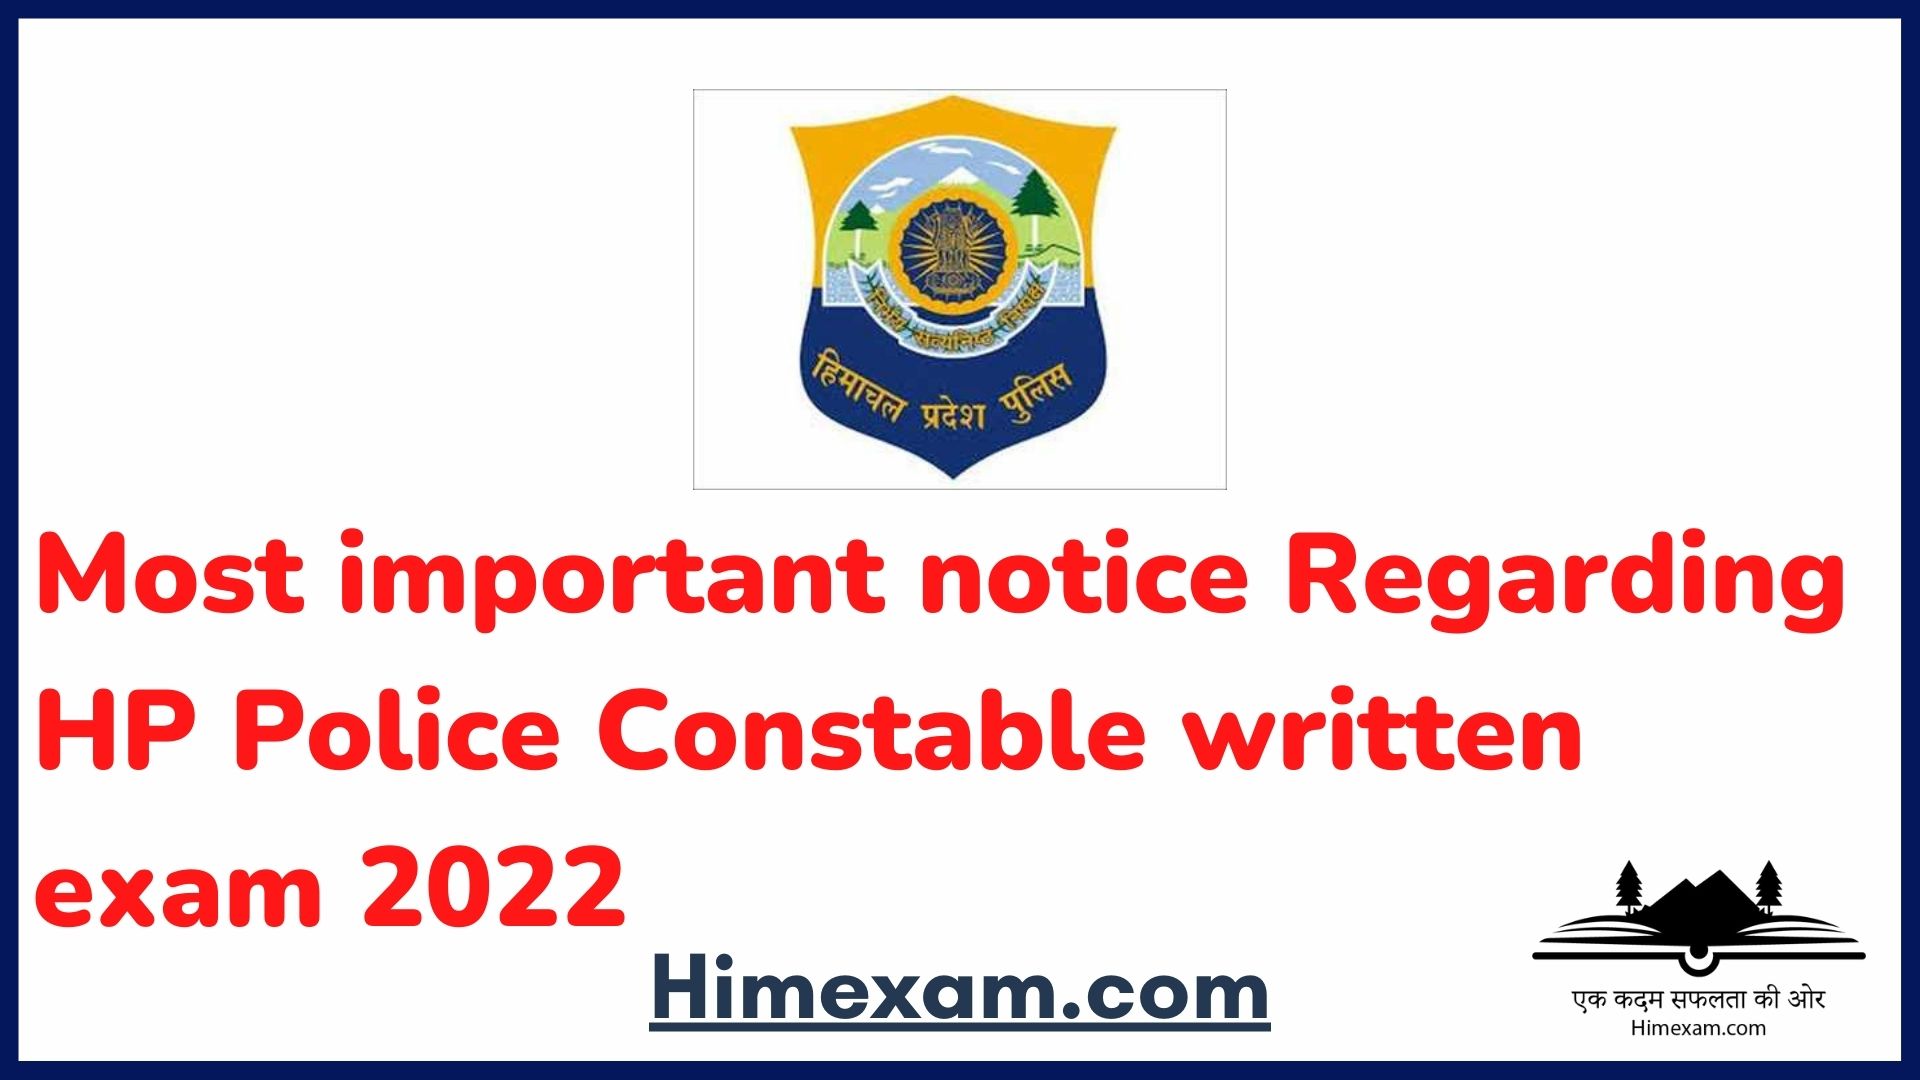 Most important notice Regarding HP Police Constable written exam 2022